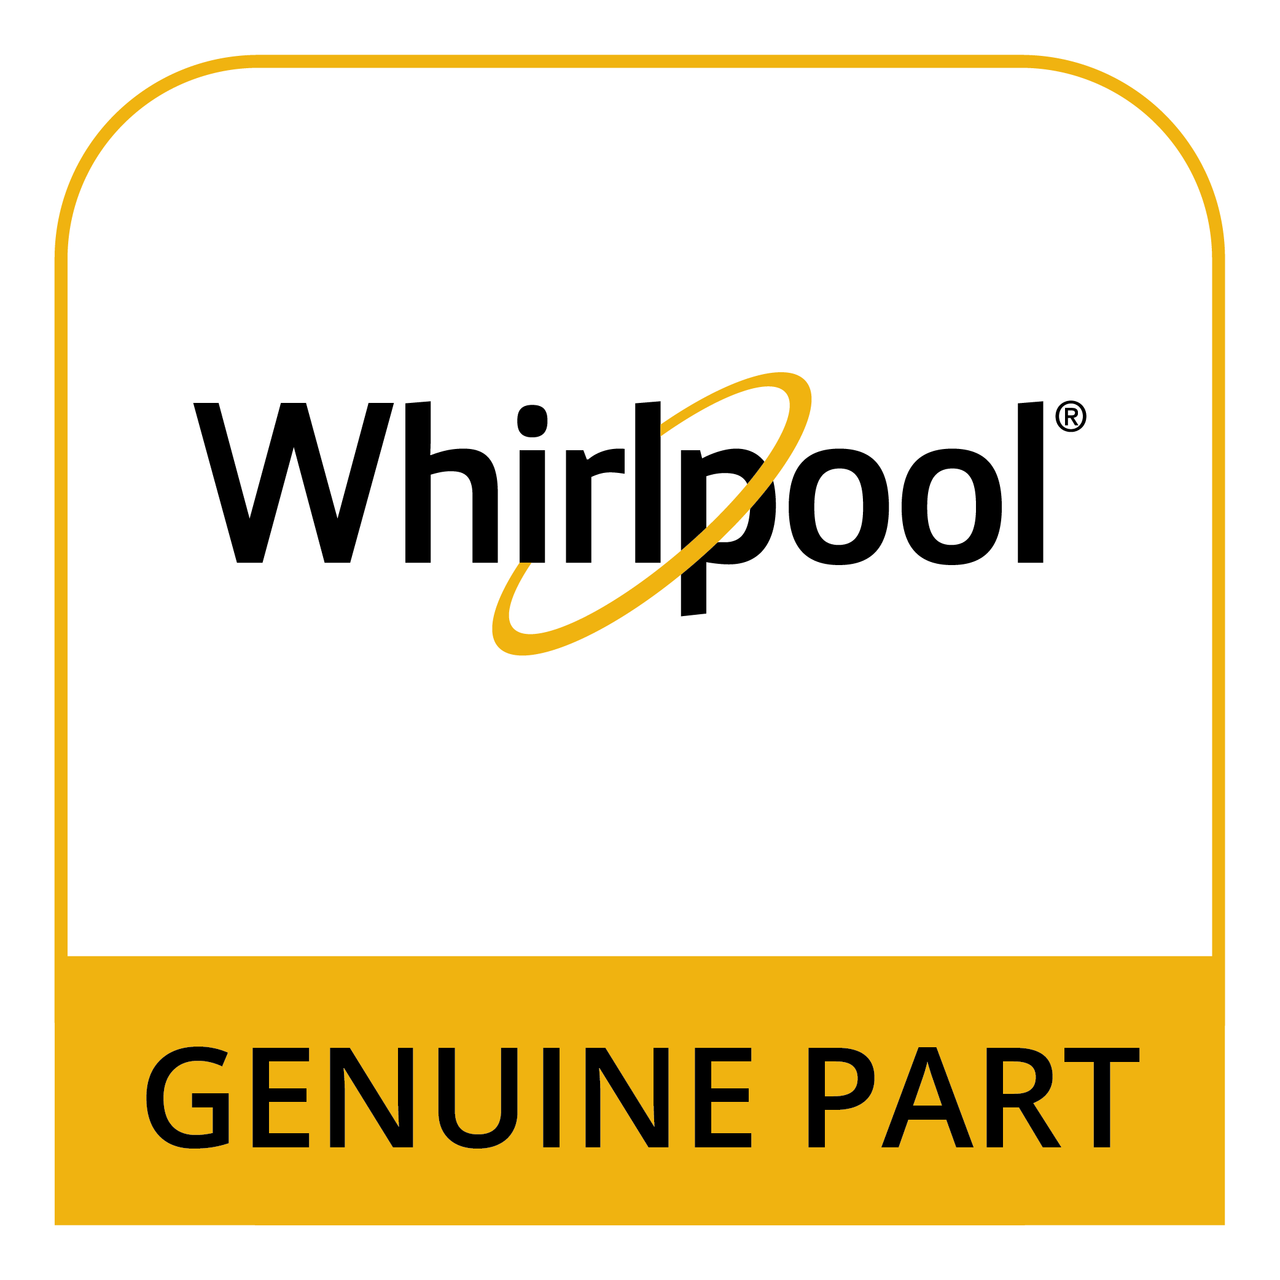 Whirlpool W10196405RW - Electric Range Round Burner Drip Bowl, Chrome - Genuine Part